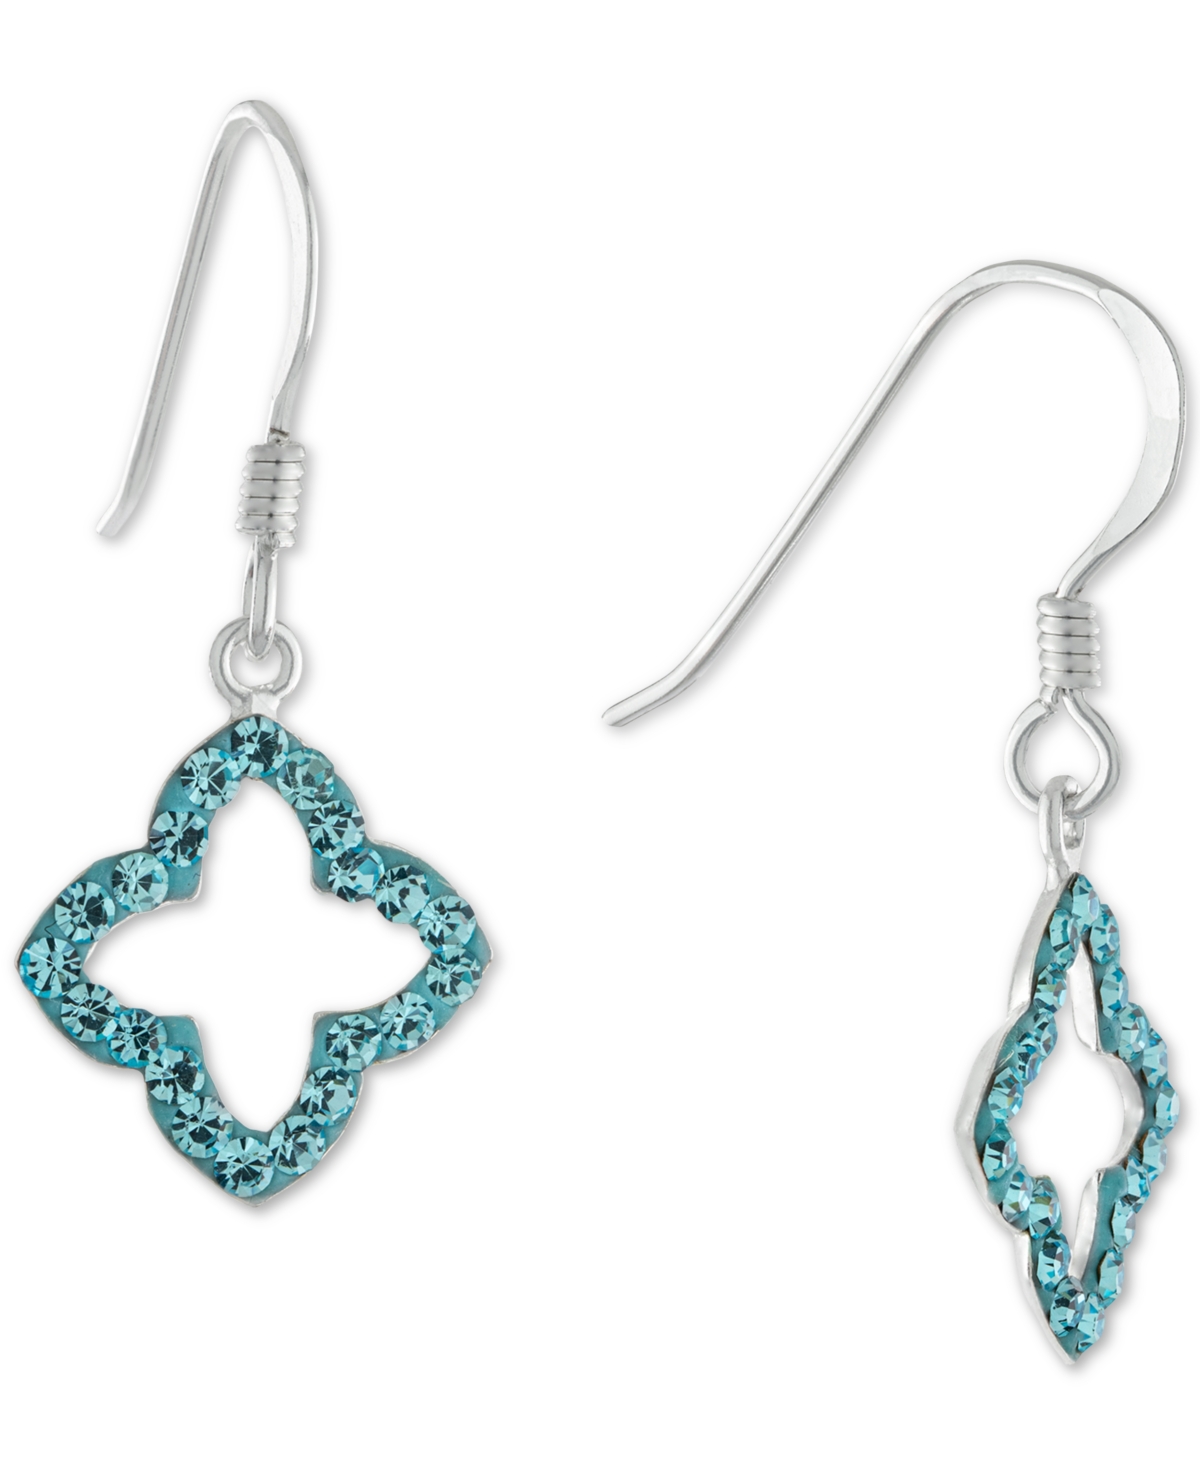 Giani Bernini Crystal Quatrefoil Drop Earrings In Sterling Silver, Created For Macy's In Blue